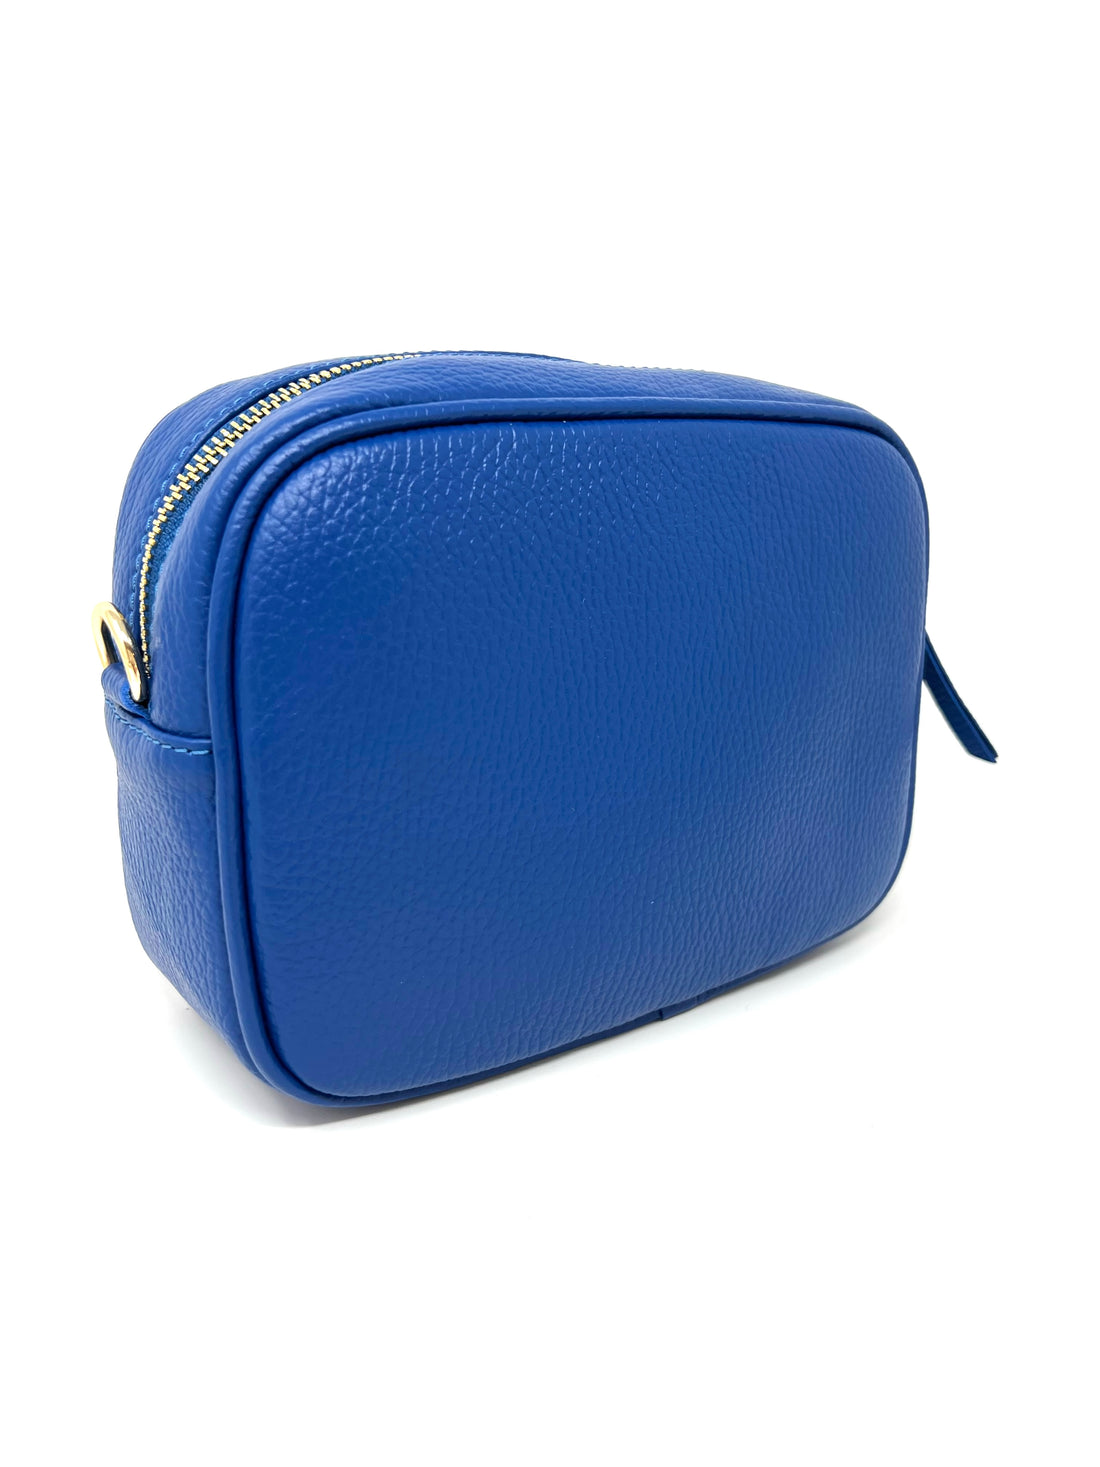 Firenze Bag in Royal Blue